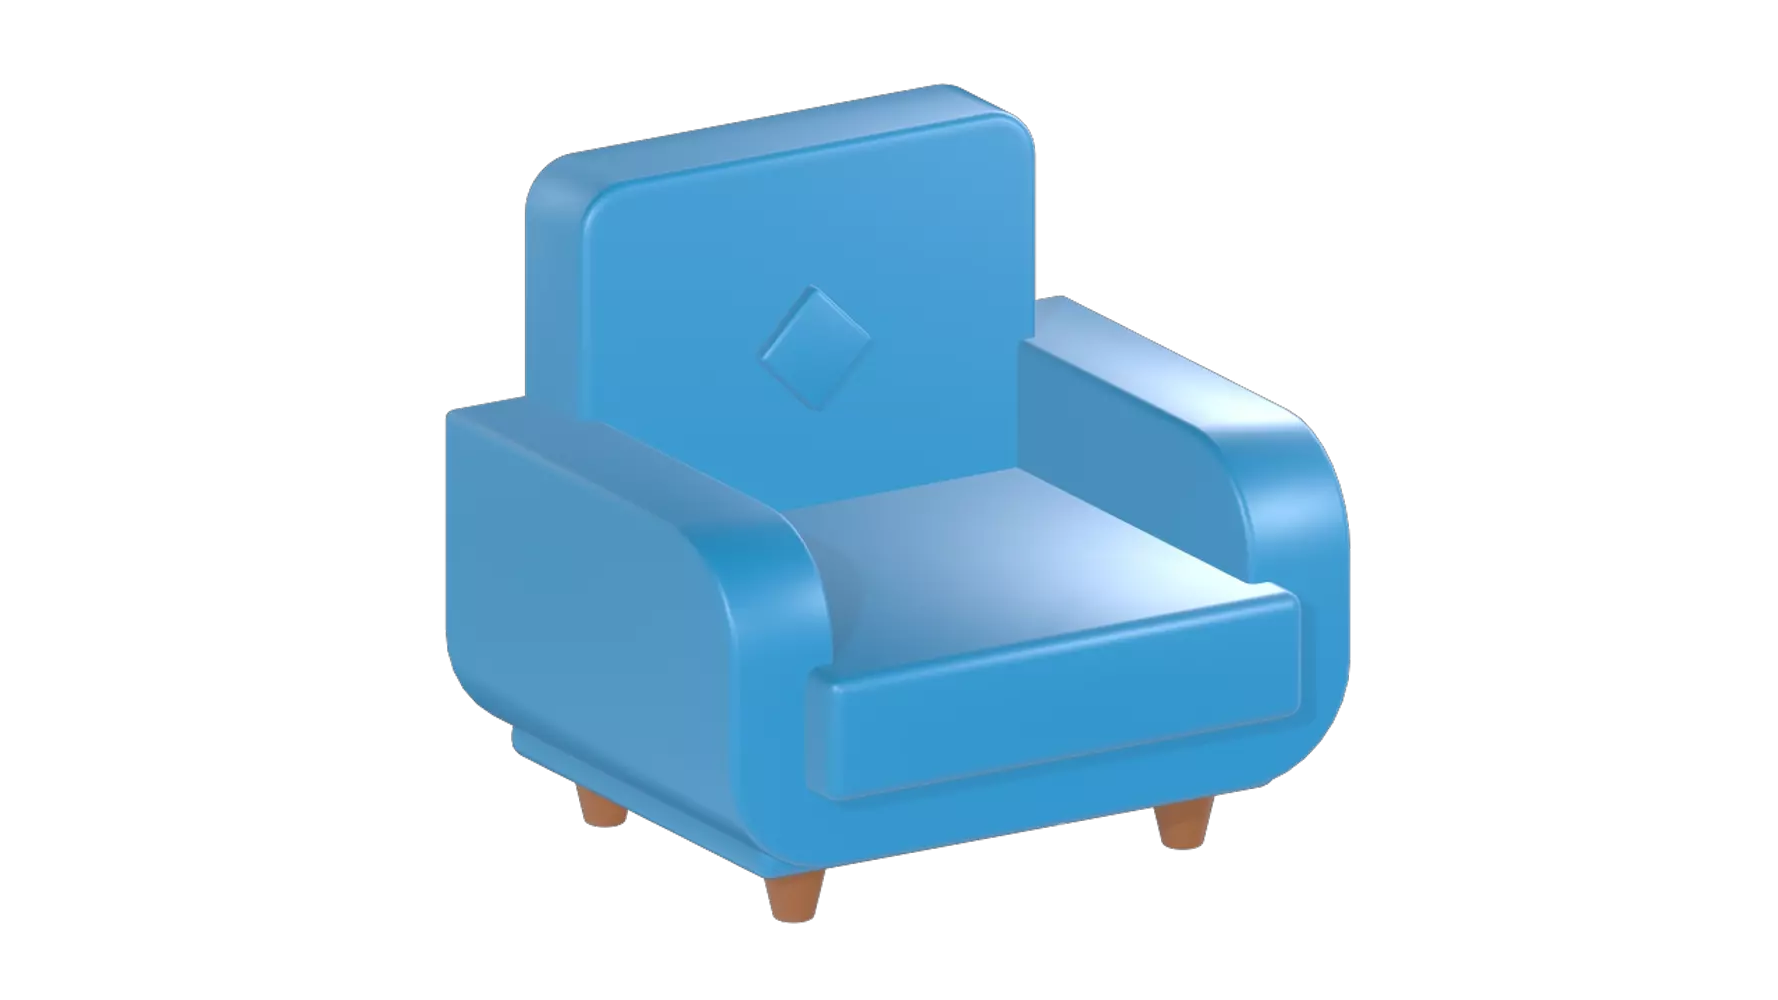 Single Sofa 3D Graphic